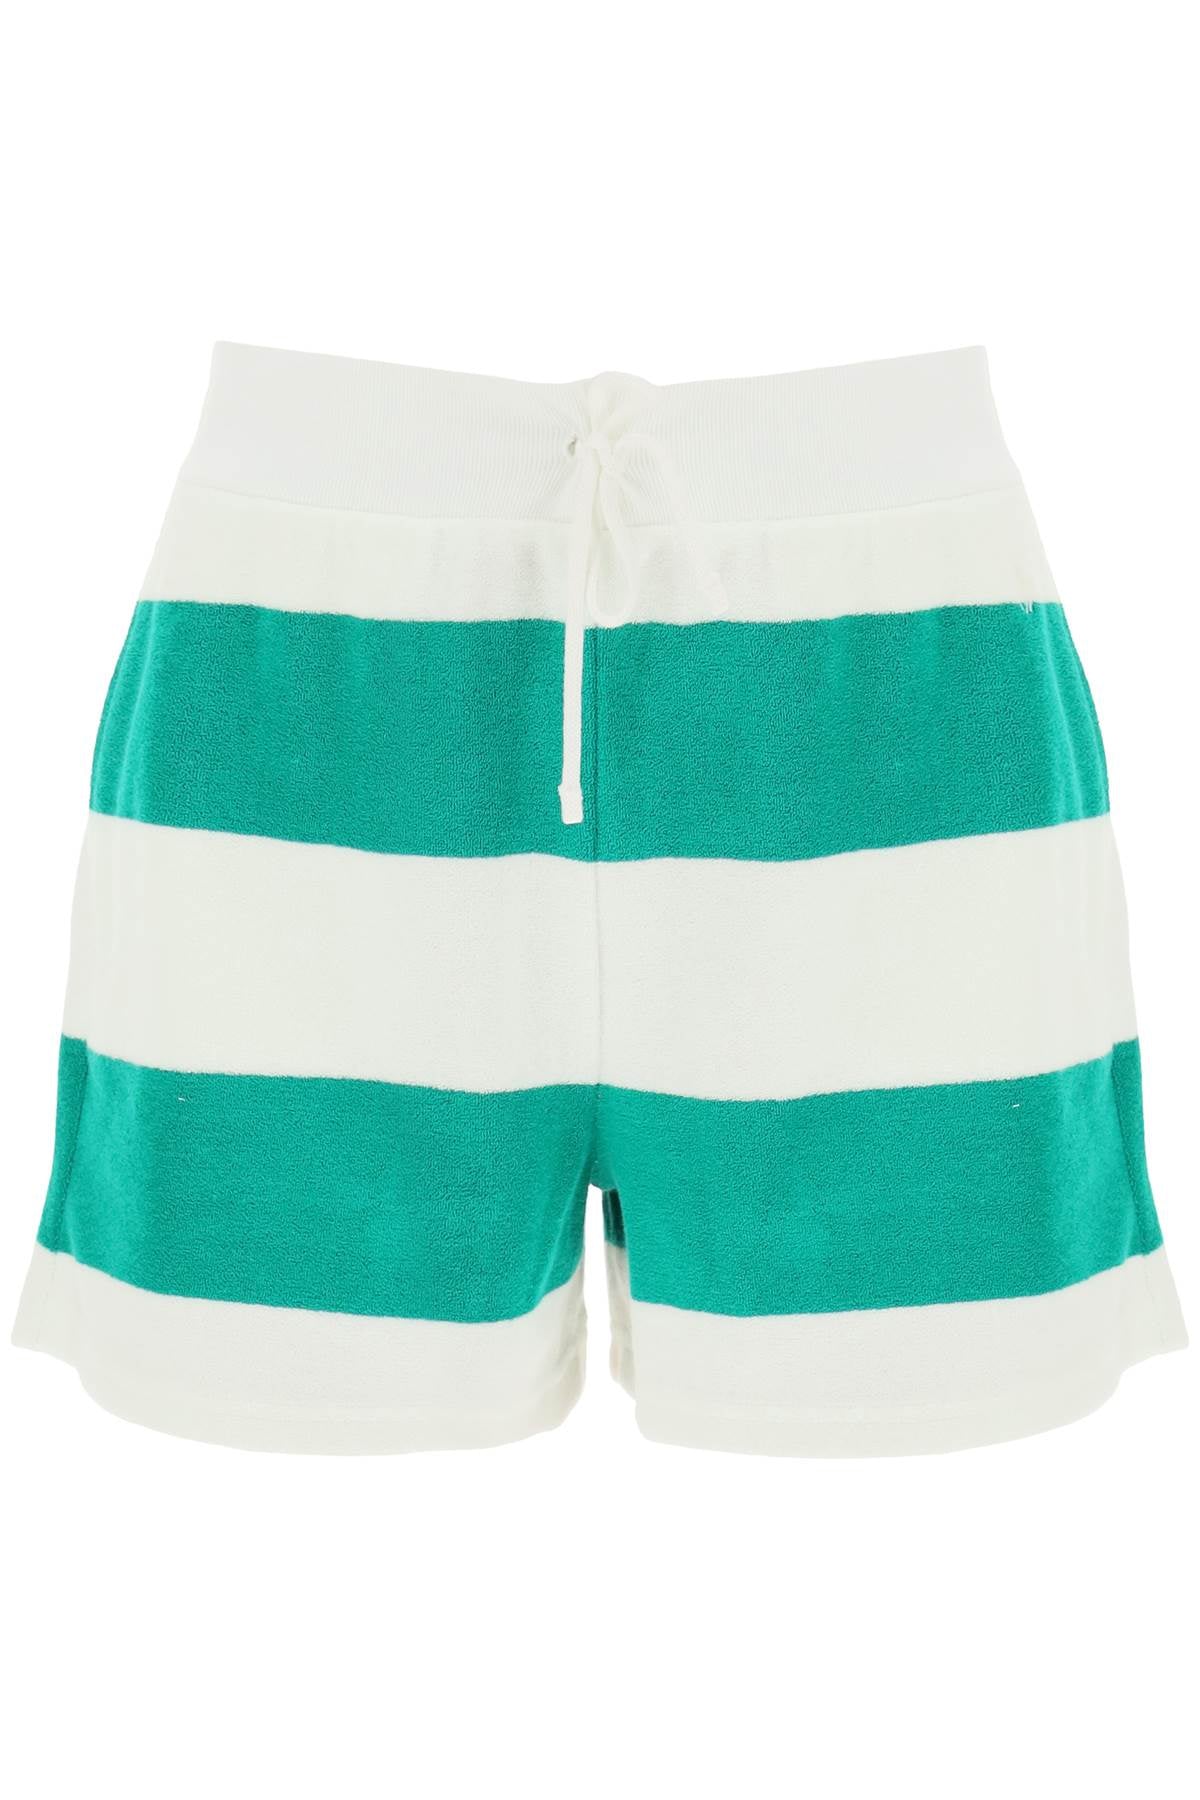 Polo ralph lauren striped terry shorts-0